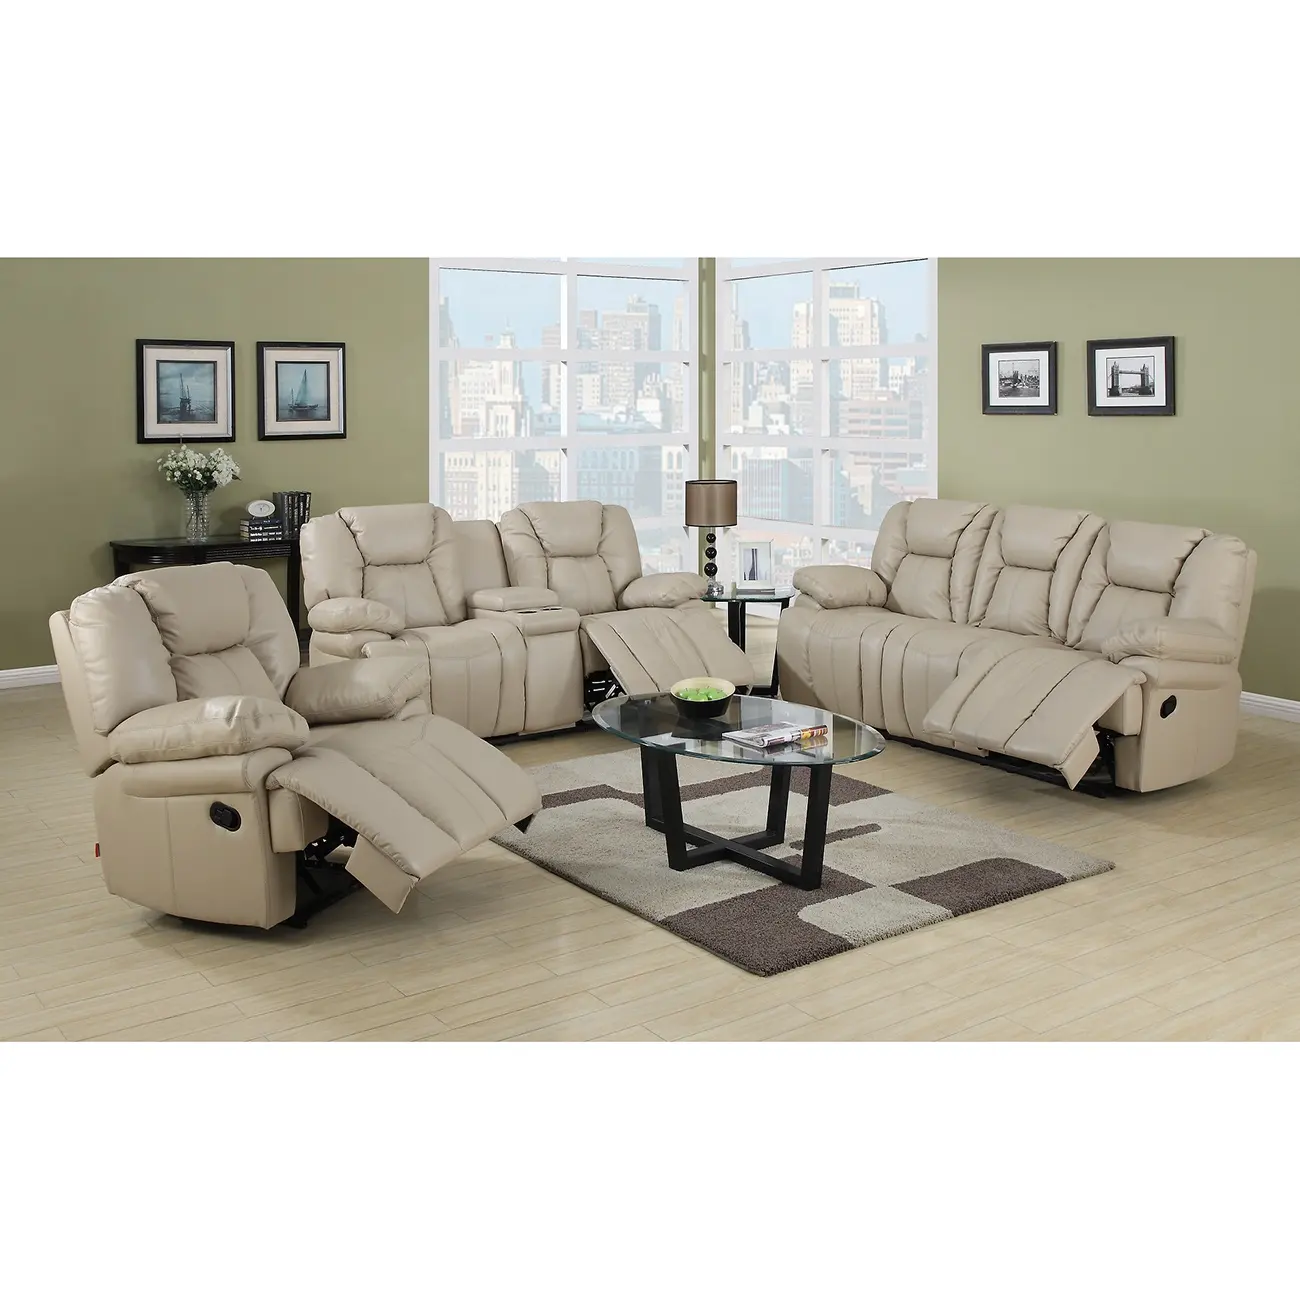 Conjunto de sofás reclinables de diseño para sala de estar, conjunto de sofás de 7 plazas, sillón reclinable de TV moderno seccional